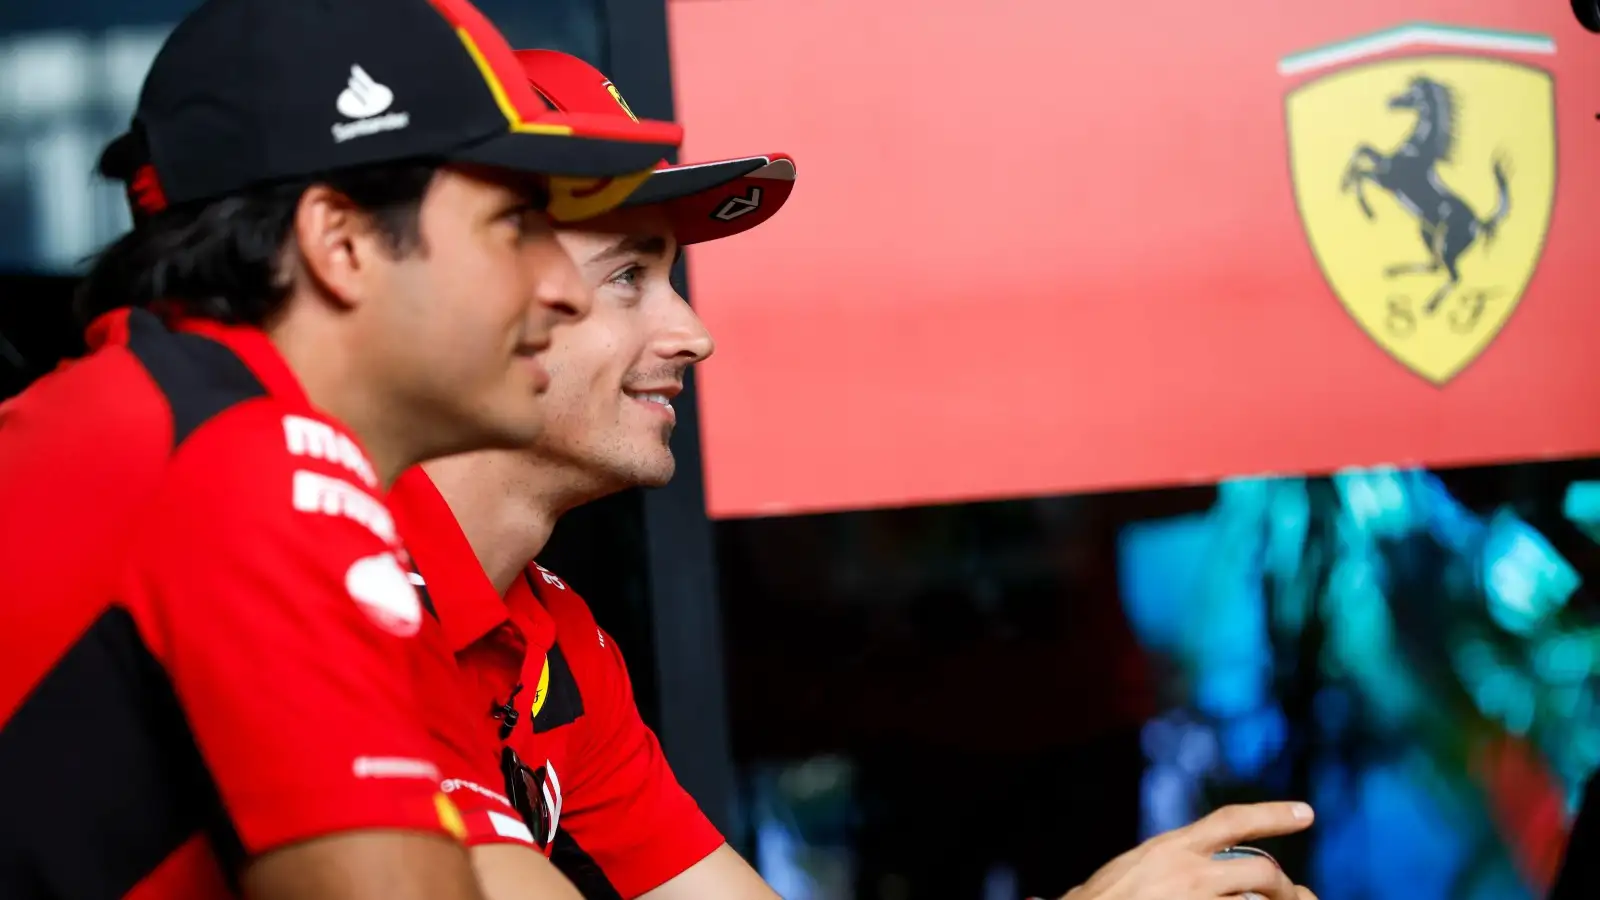 Ferrari drivers Carlos Sainz and Charles Leclerc smiling. Saudi Arabia, March 2023.